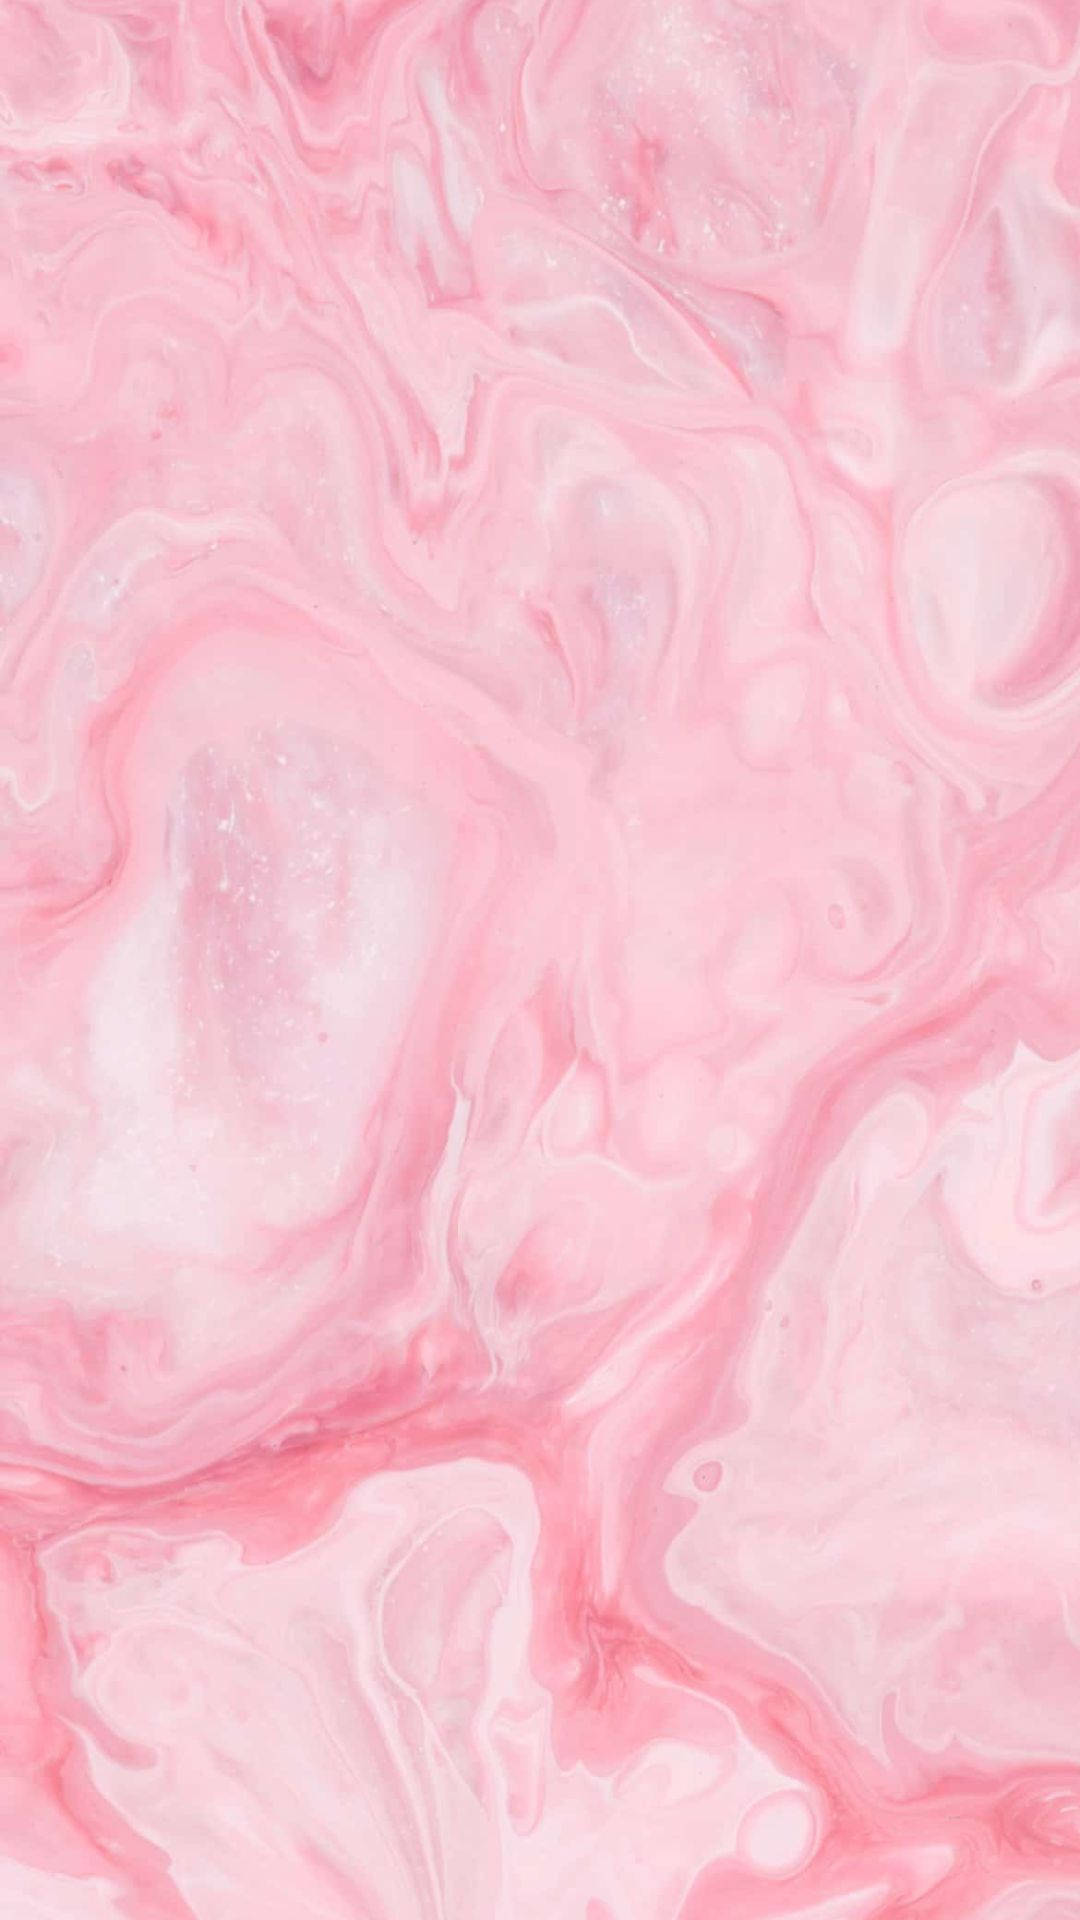 Aesthetic Pink Liquid Picture